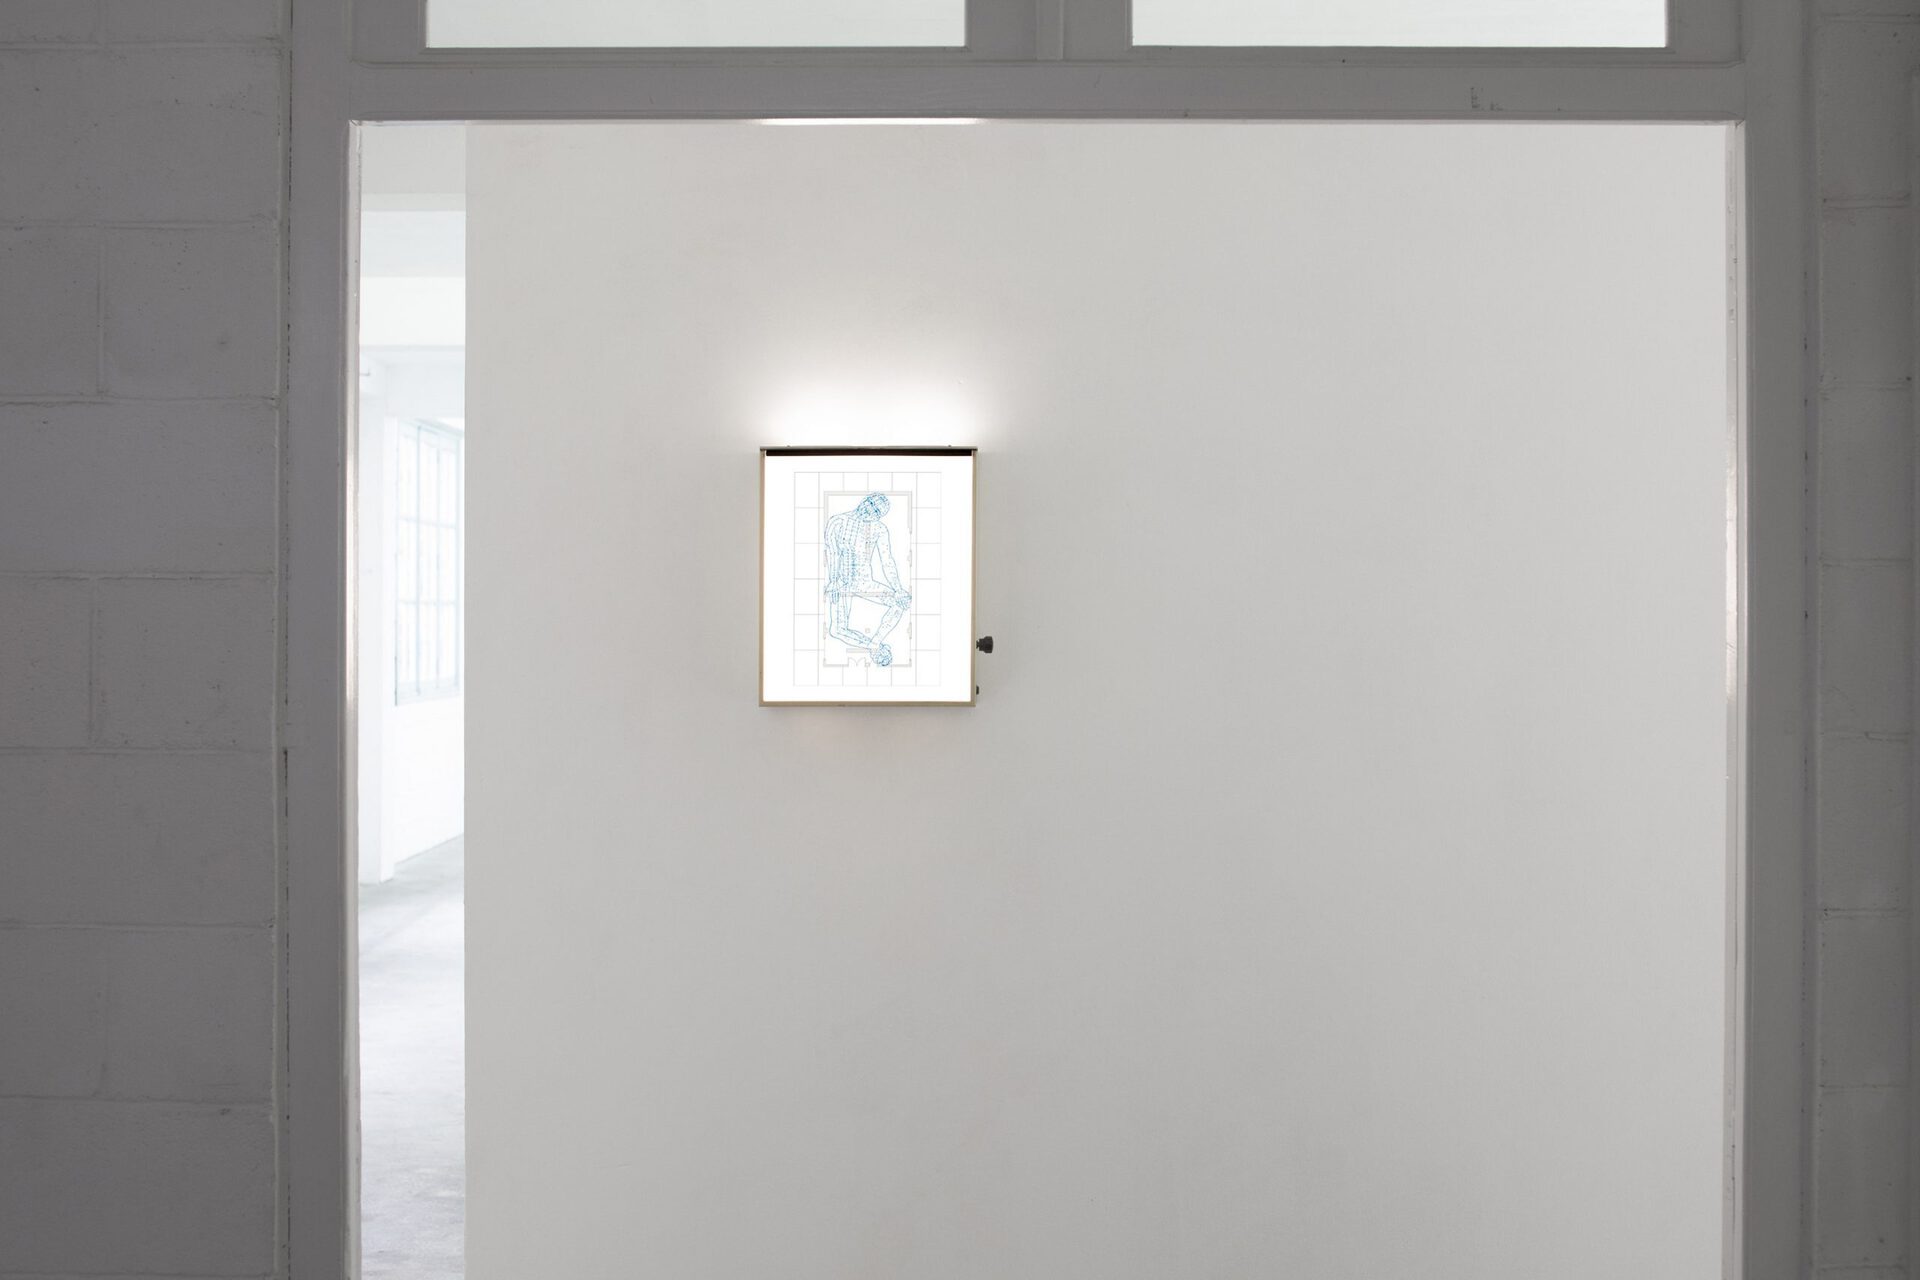 Maxime Bichon, Négatoscope, 2021, X-ray viewing box, printed plexiglass, 41x45,5x13,5cm